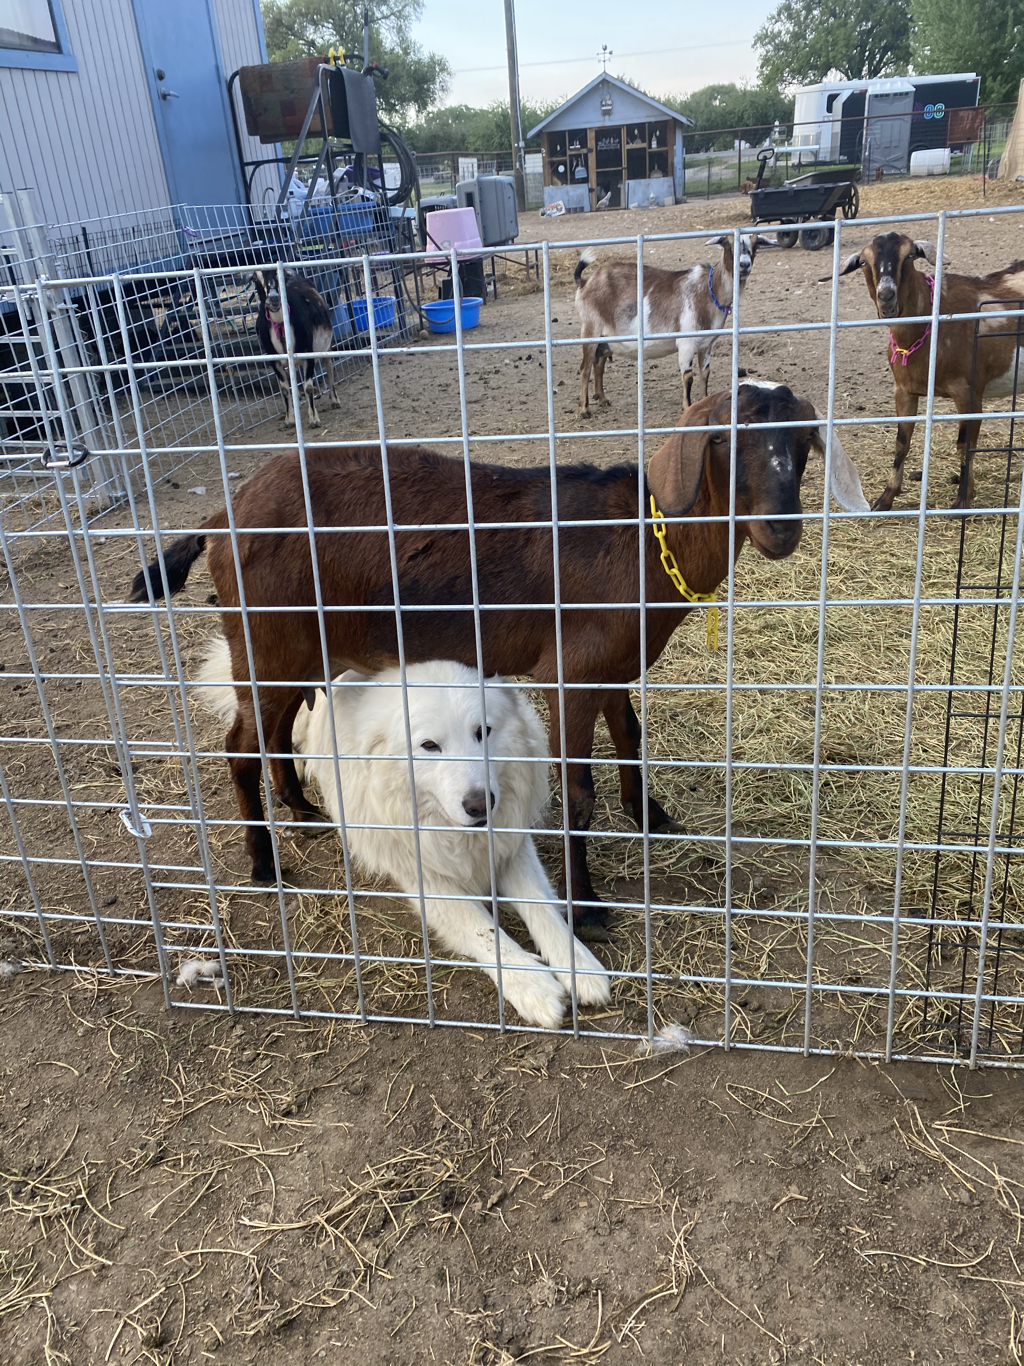 Eureka Mohair Farm Olaf maremma sheepdog